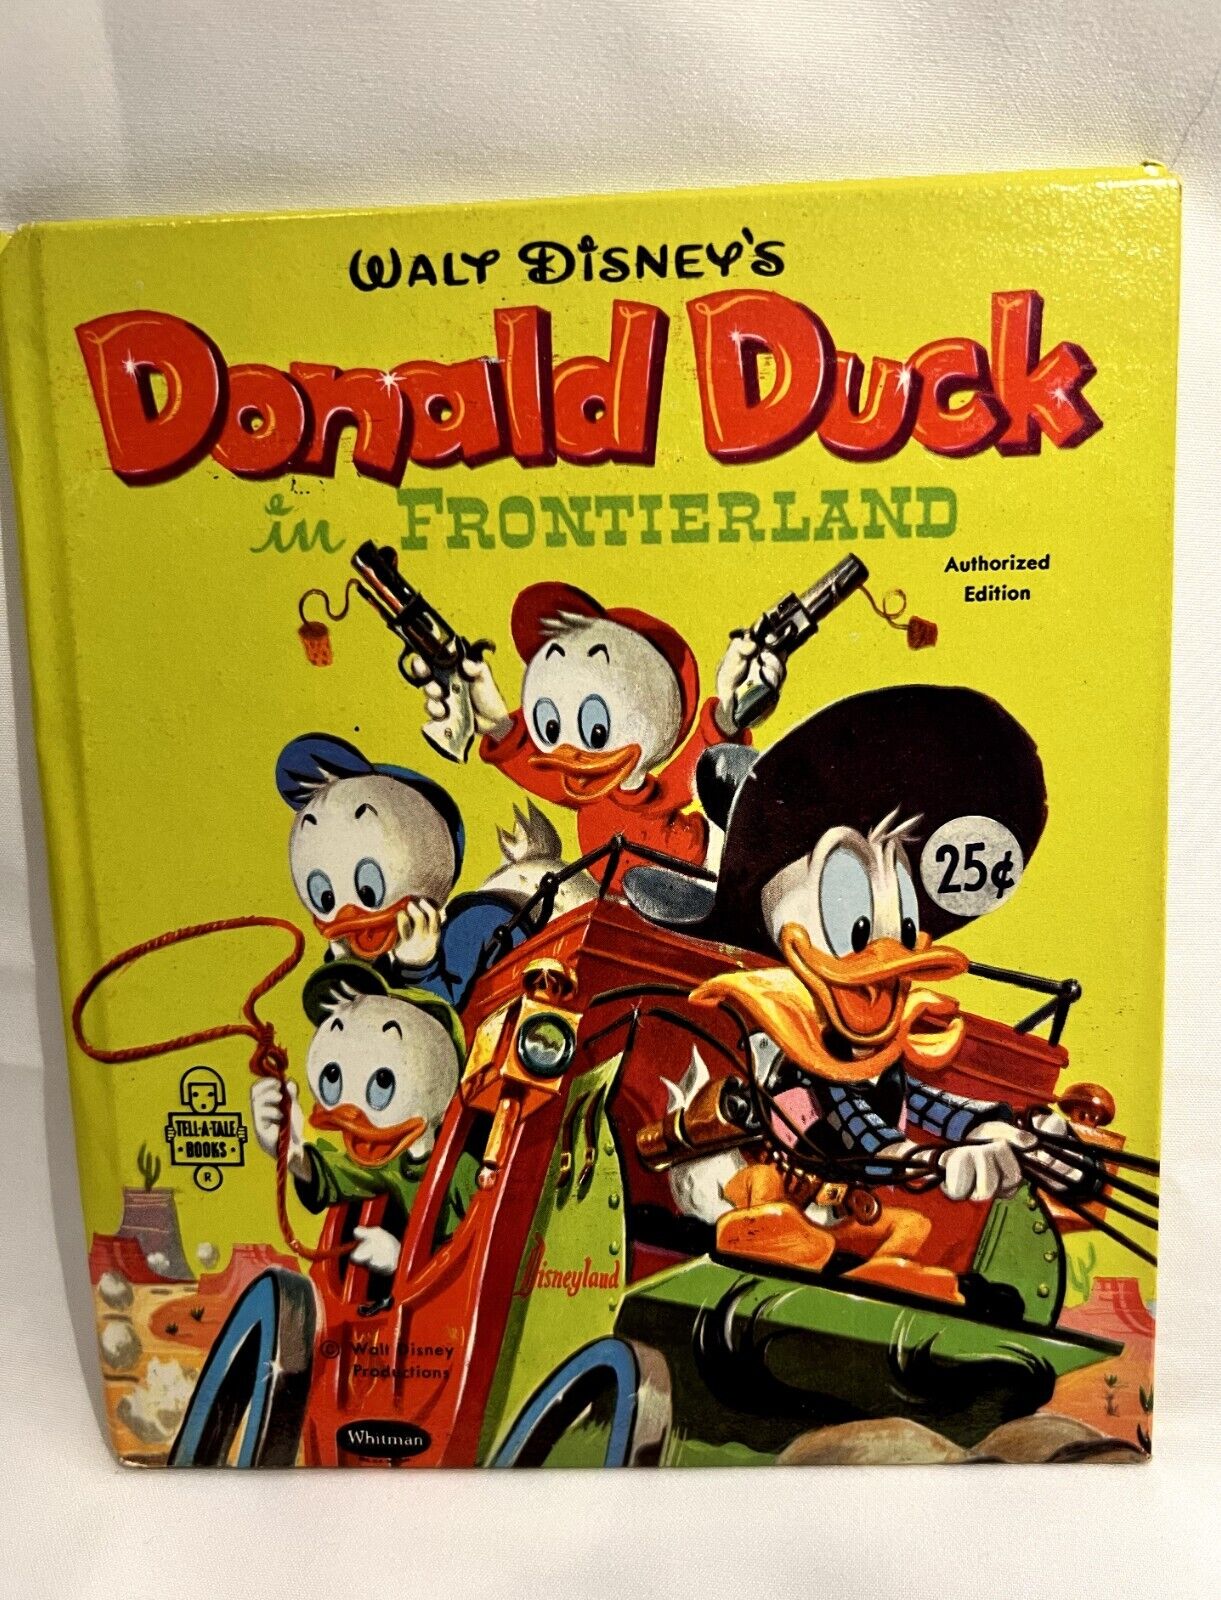 Walt Disney\'s Donald Duck in Frontierland Vintage Book 1957 - Authorized Edition